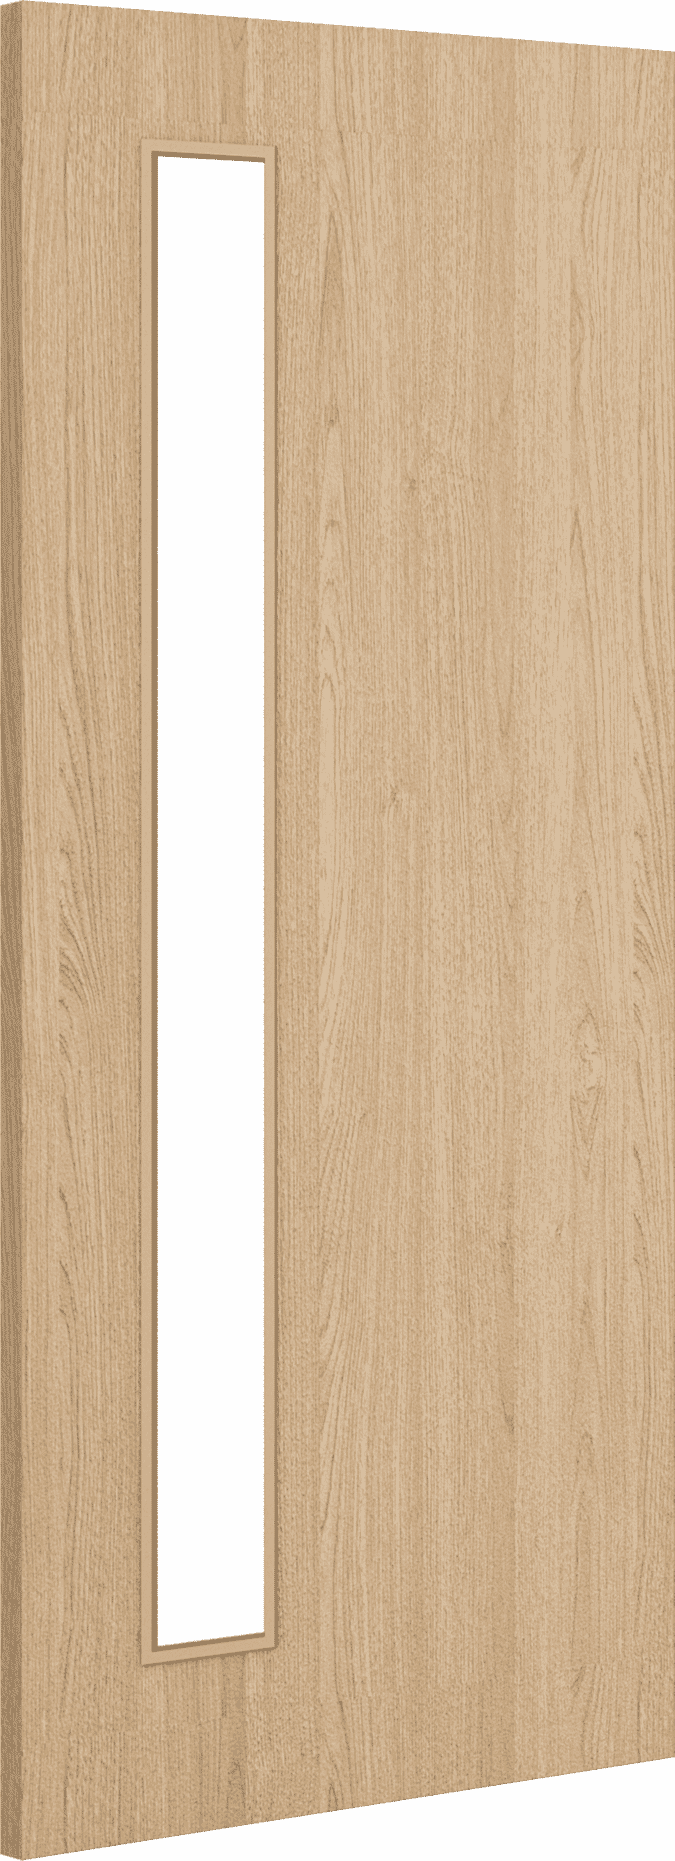 2040mm x 826mm x 44mm Architectural Oak 06 Frosted Glazed - Prefinished FD30 Fire Door Blank